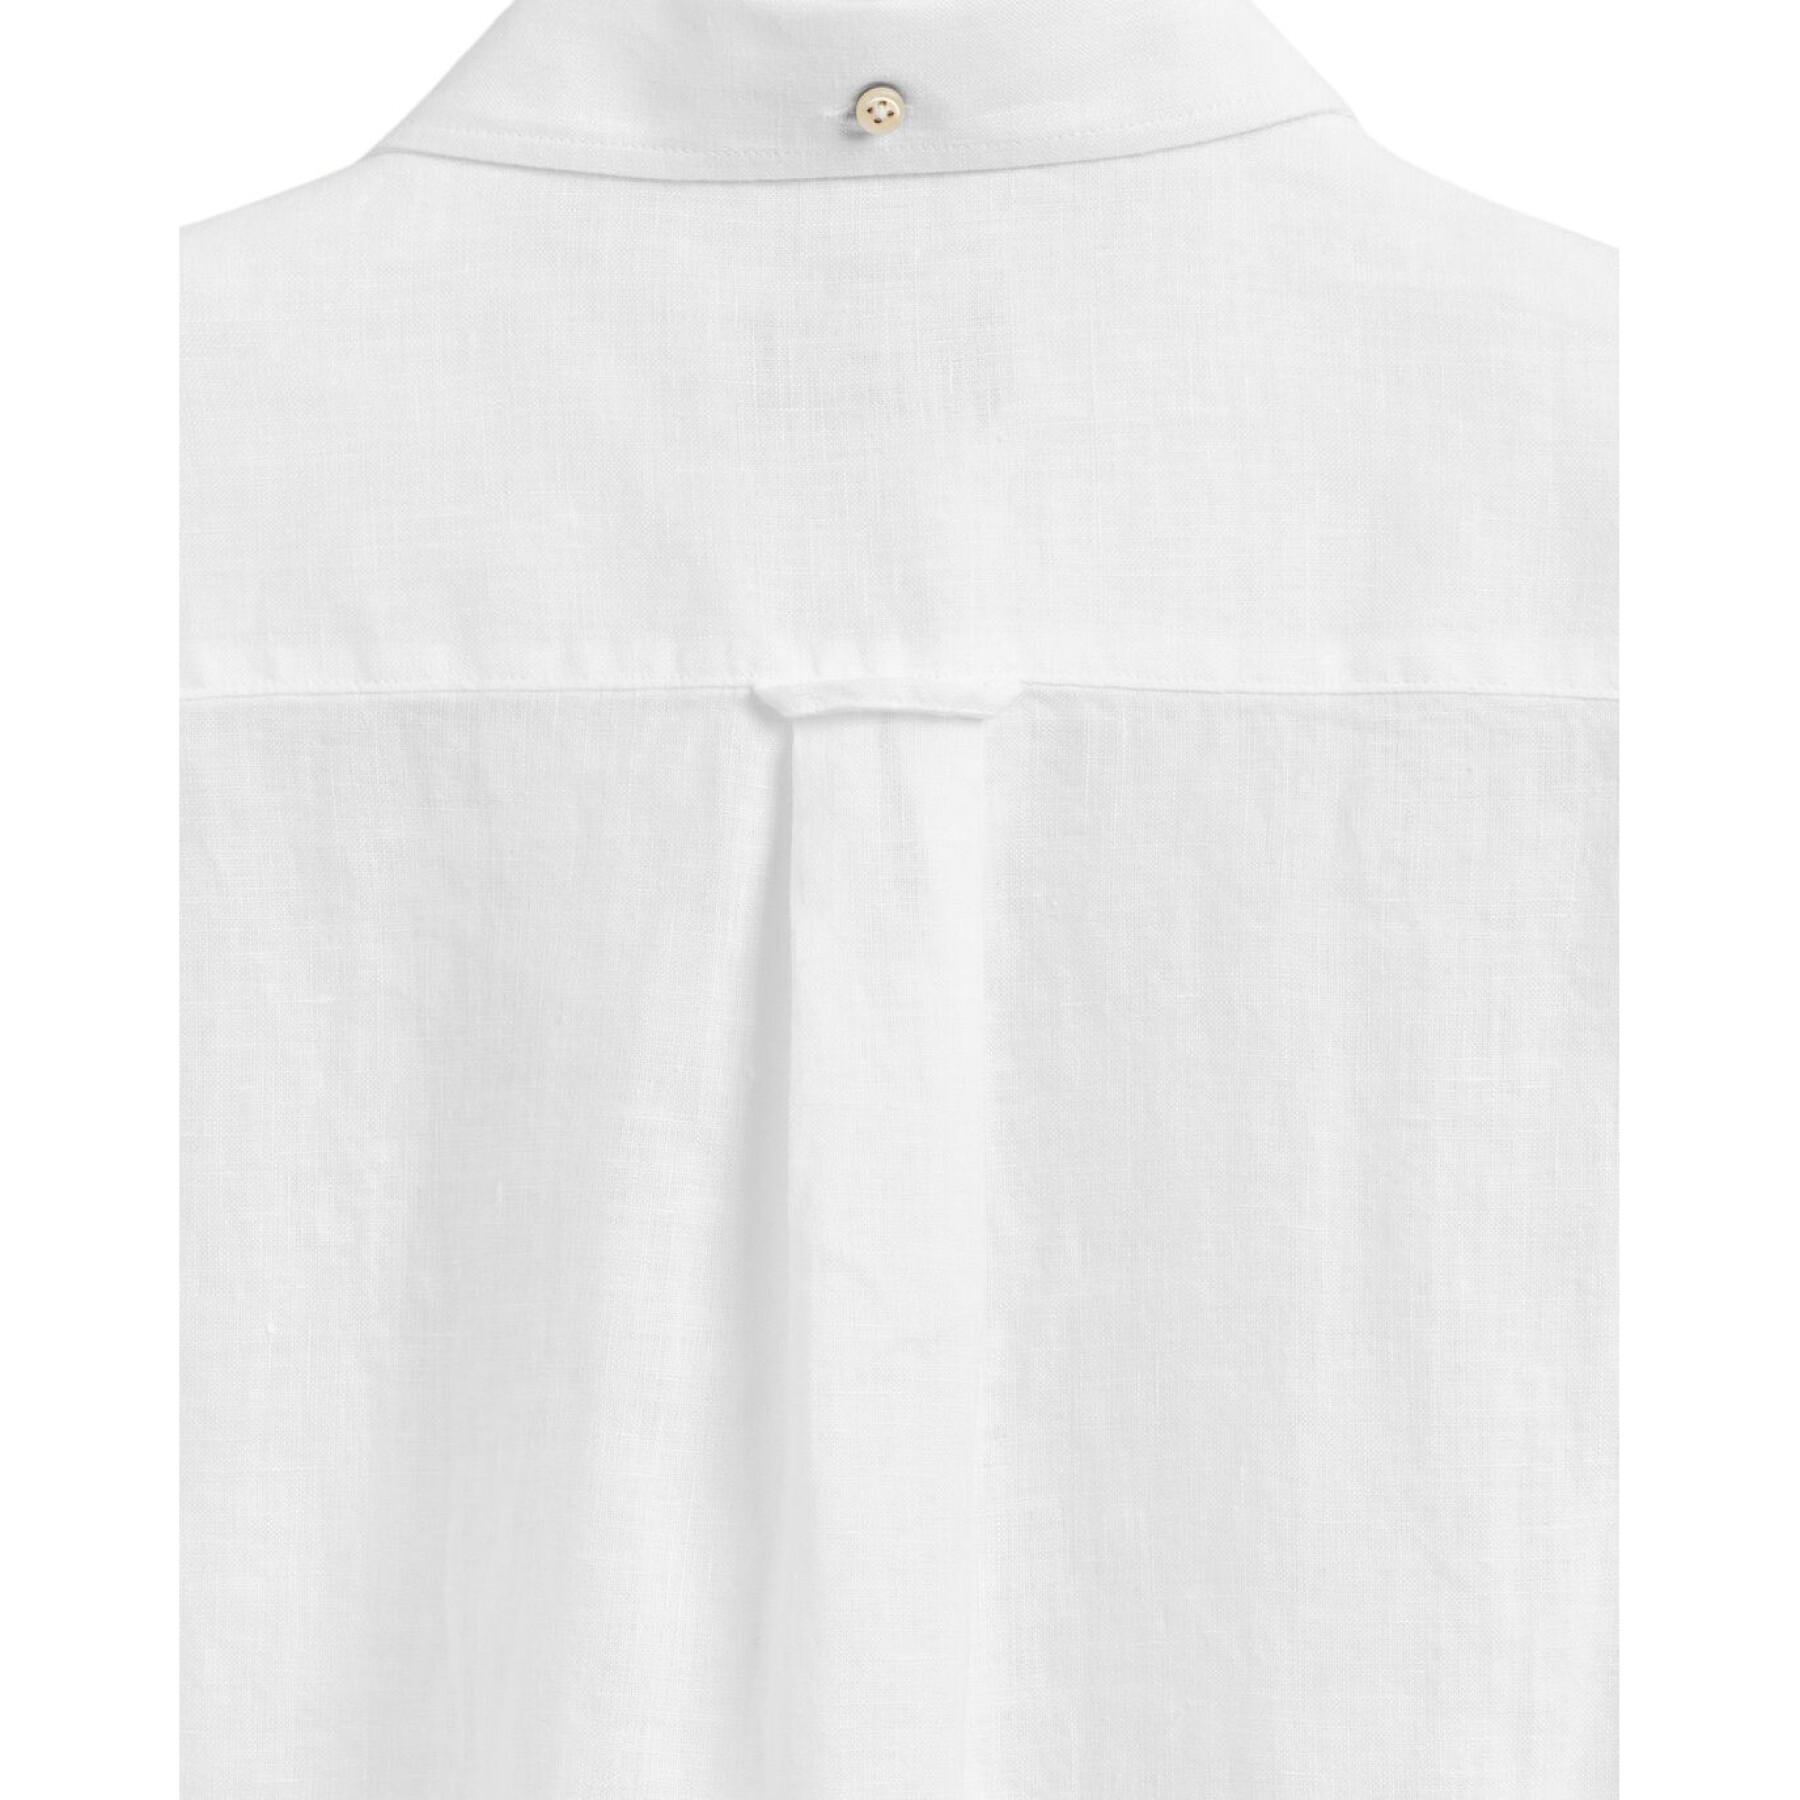 Camicia Gant Regular Fit Linen Shir